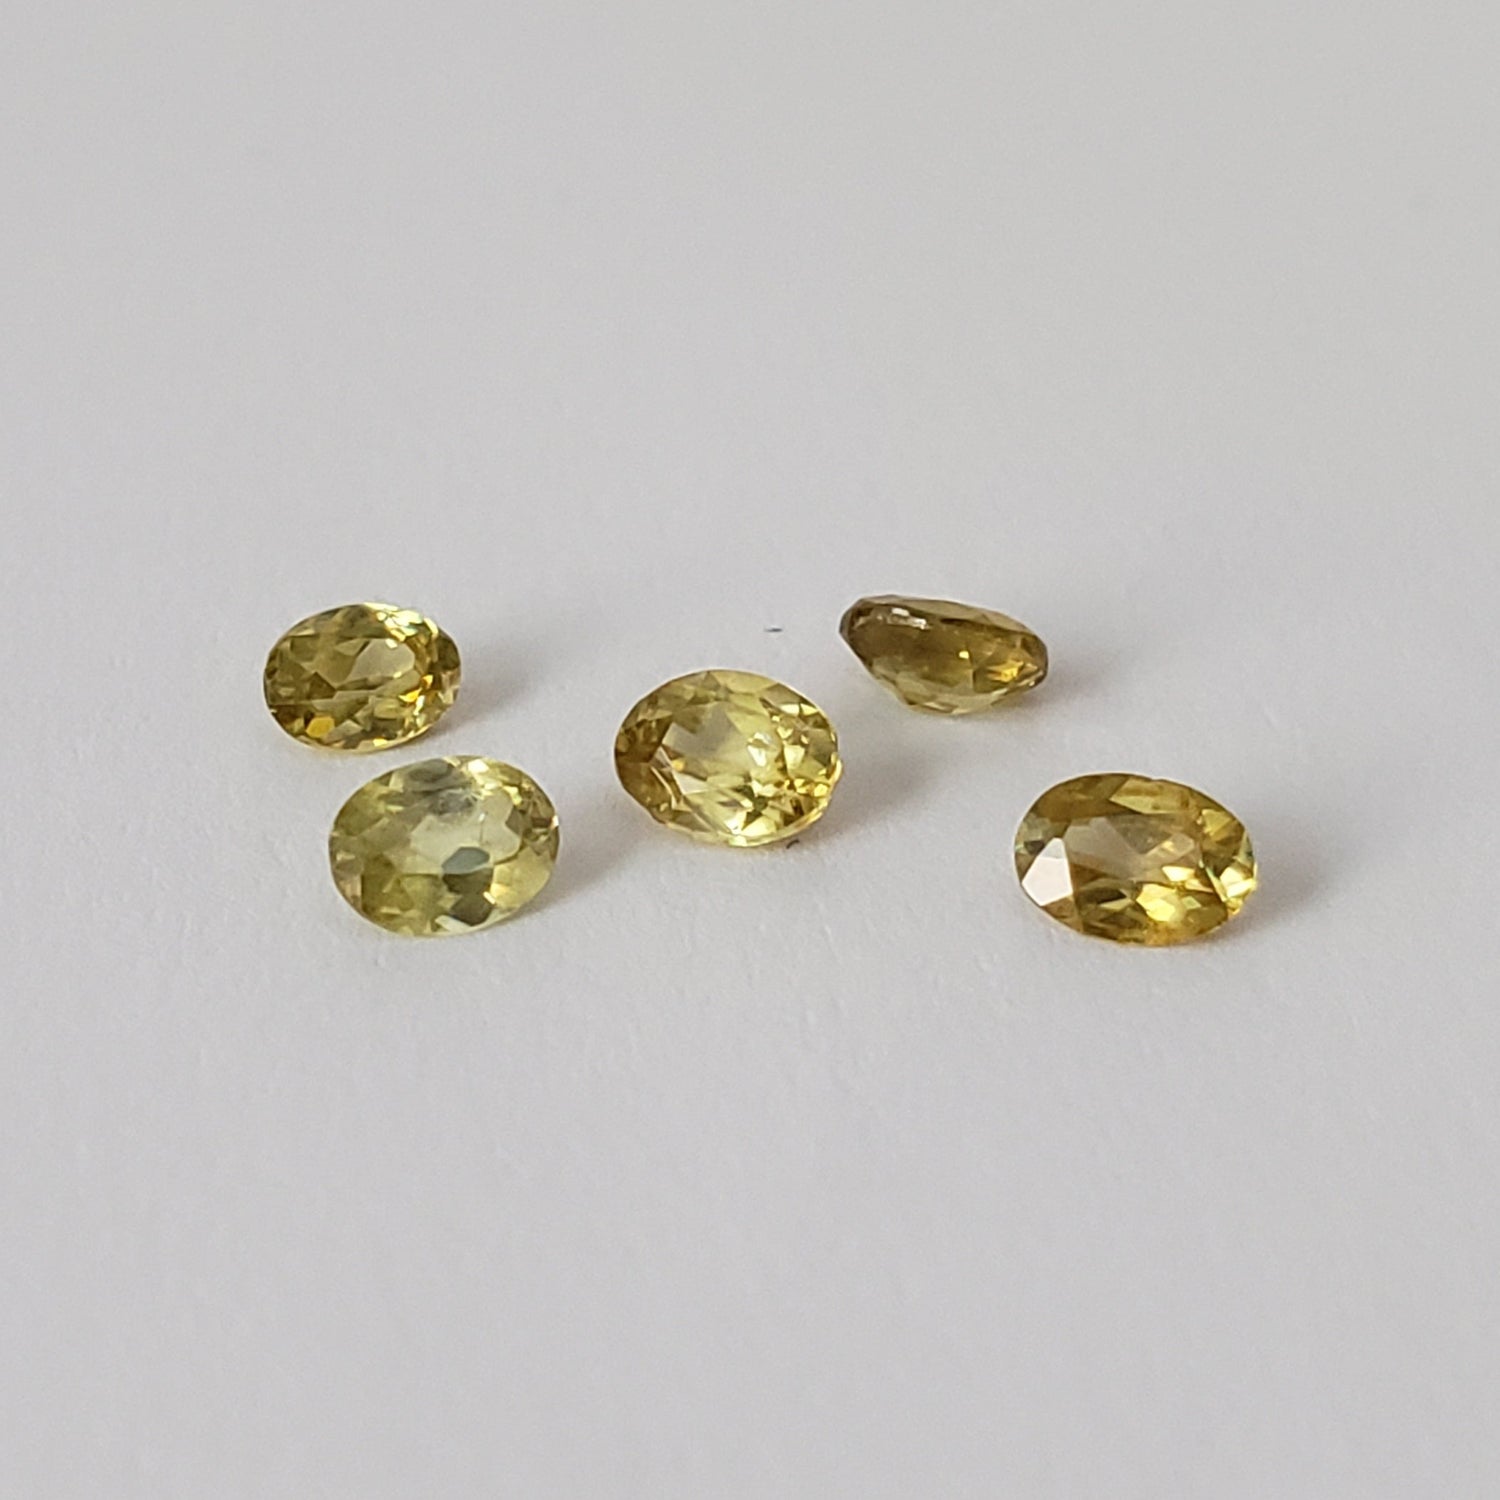 Sphene | 5 Piece Gemstone Lot | Oval Cut | Canary Yellow | Mix Size Lot